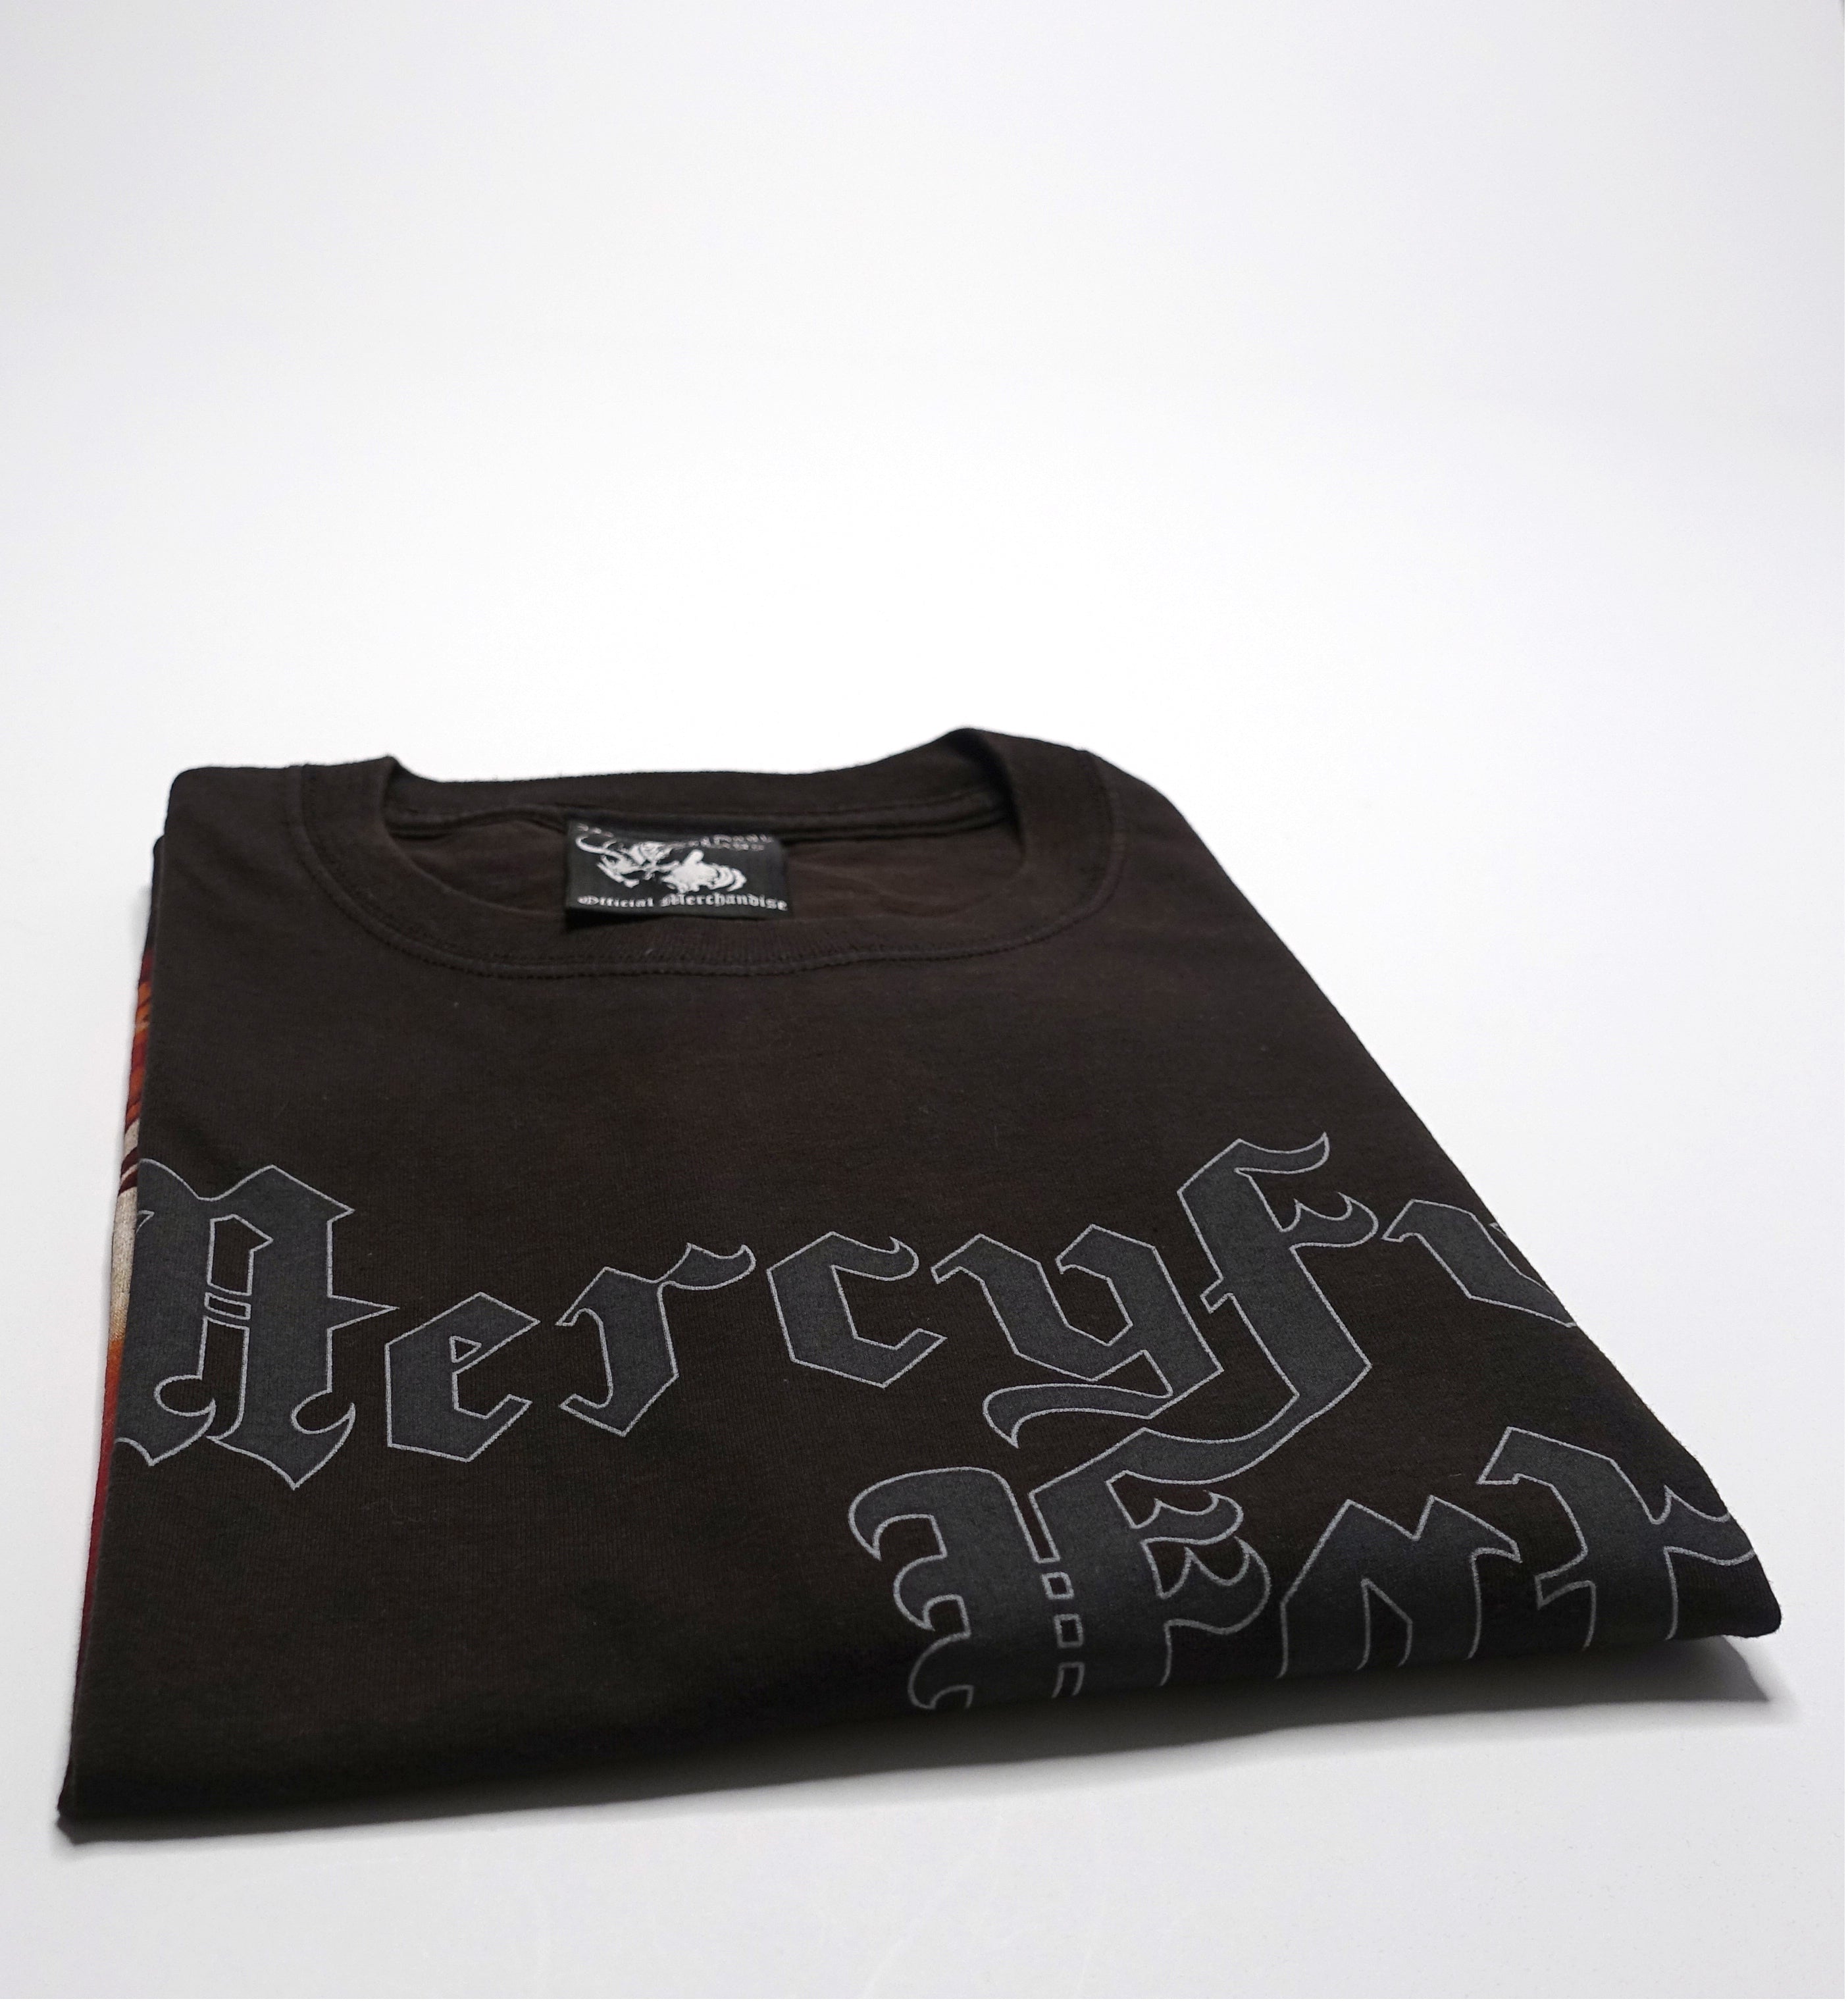 Mercyful Fate – 9 Tour Shirt Size Large